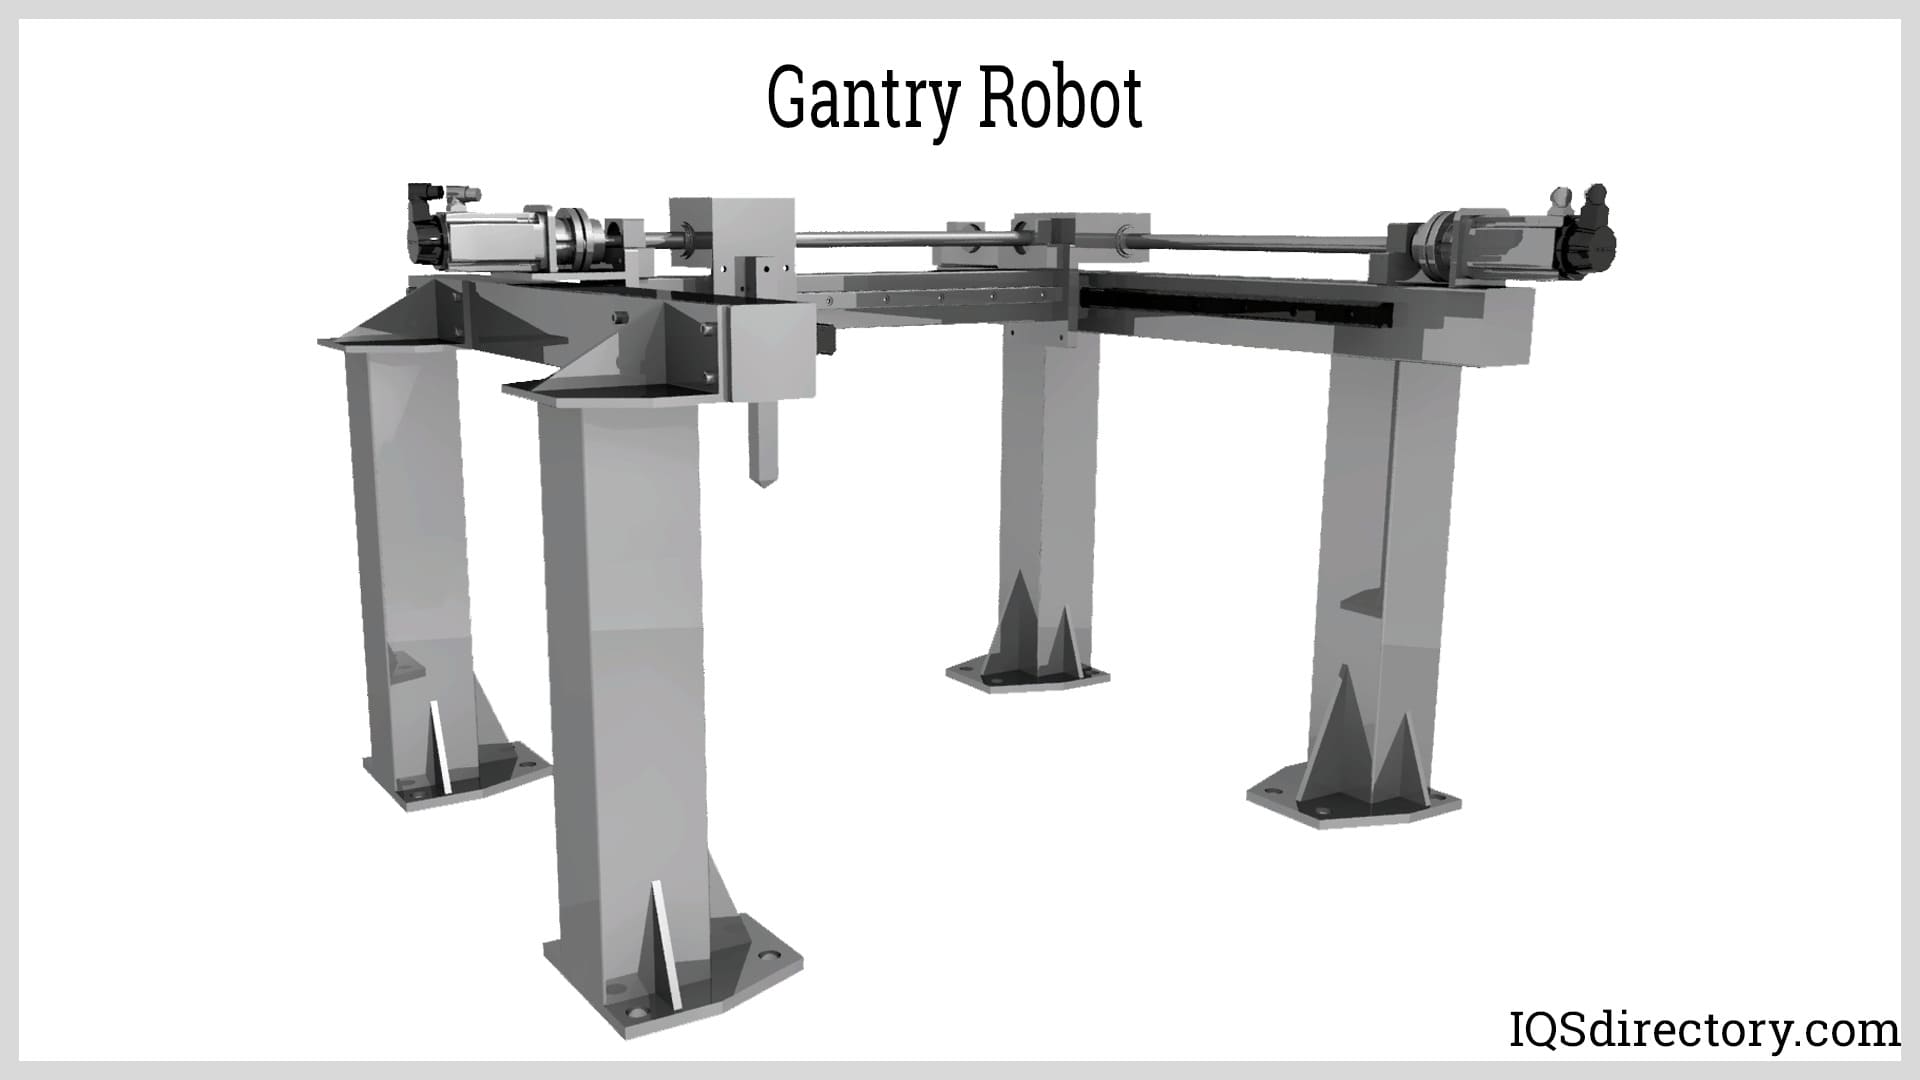 Gantry Robot